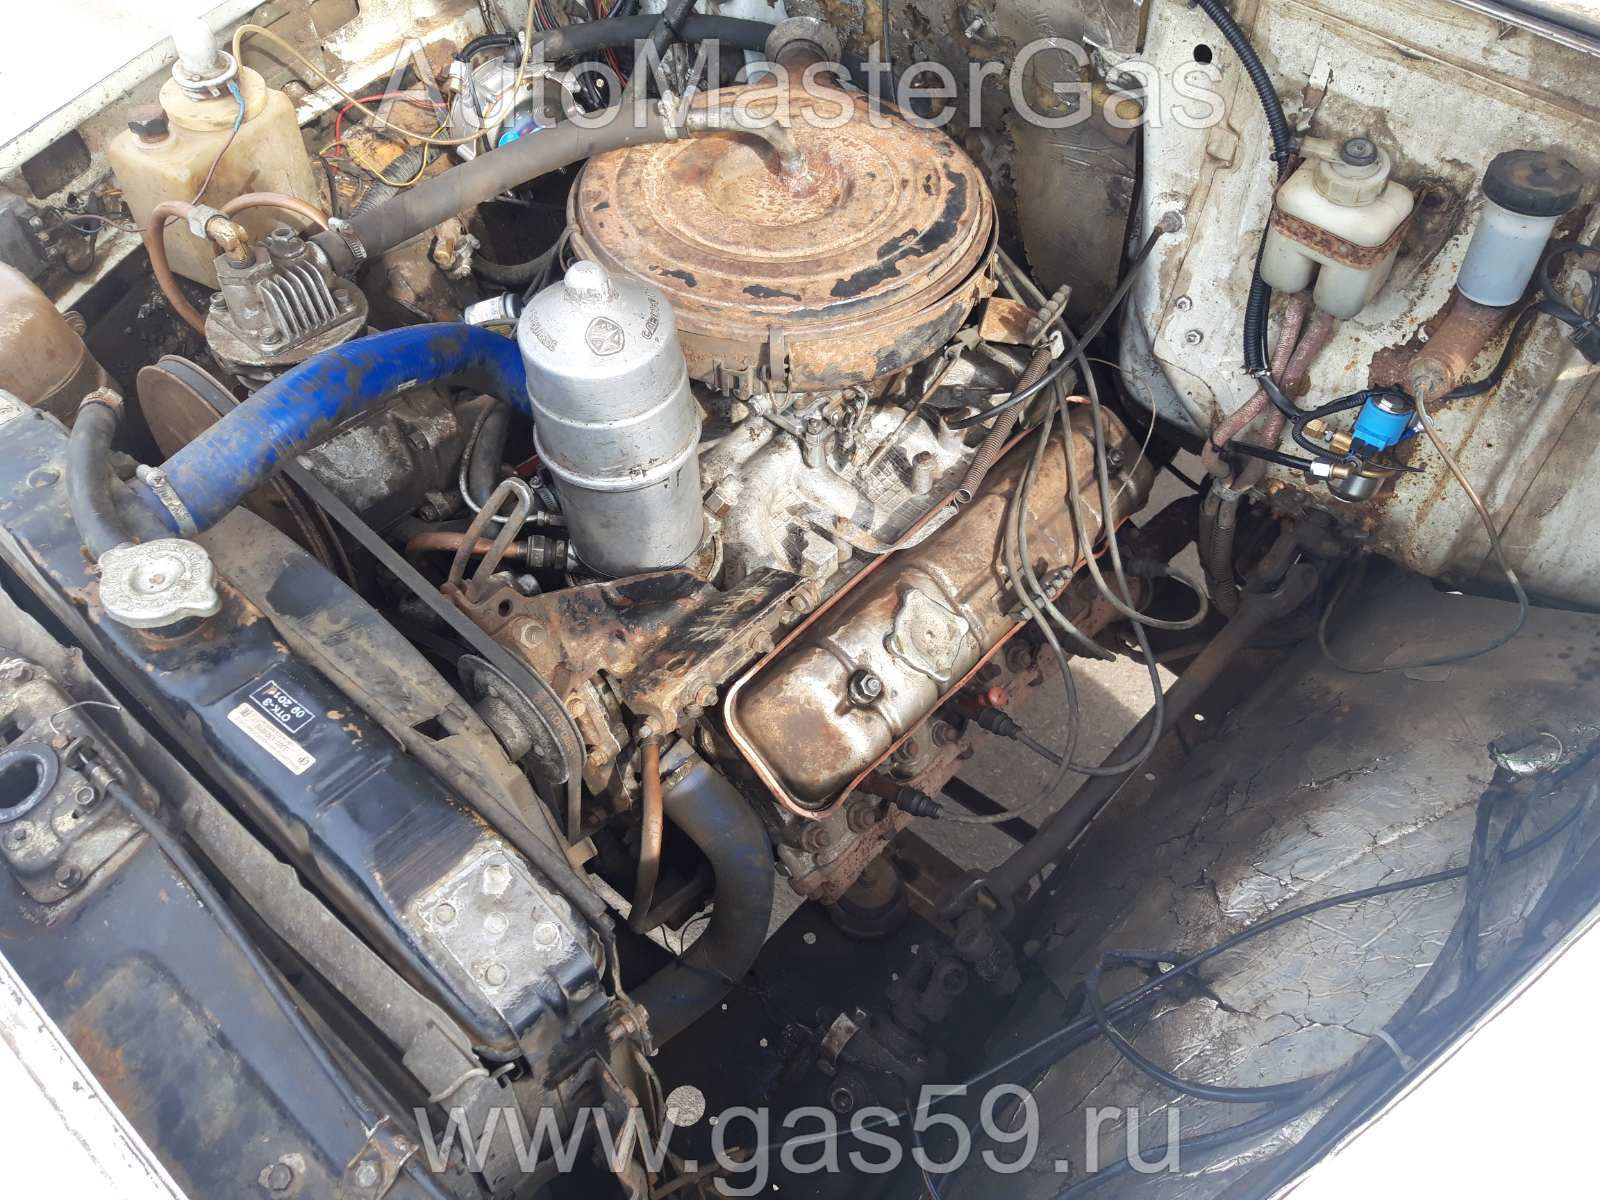 Двигатель бензиновый для ГАЗ-3307 КПП 5ст АИ-92 Евро-0 ЗМЗ-513